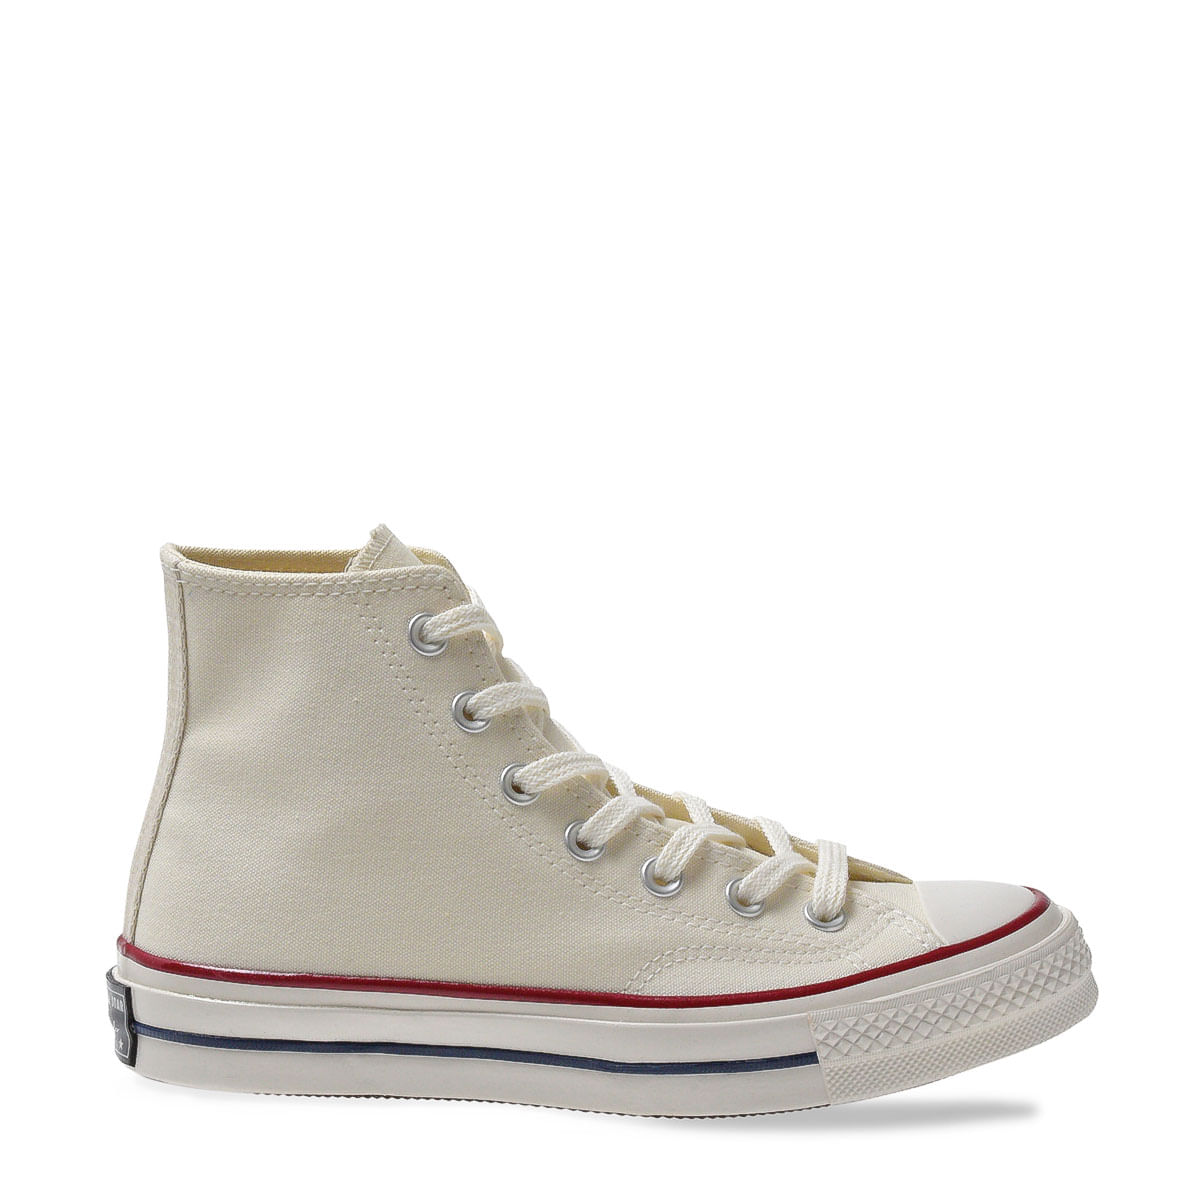 Converse Tênis All Star Feminino Branco - Menina Shoes